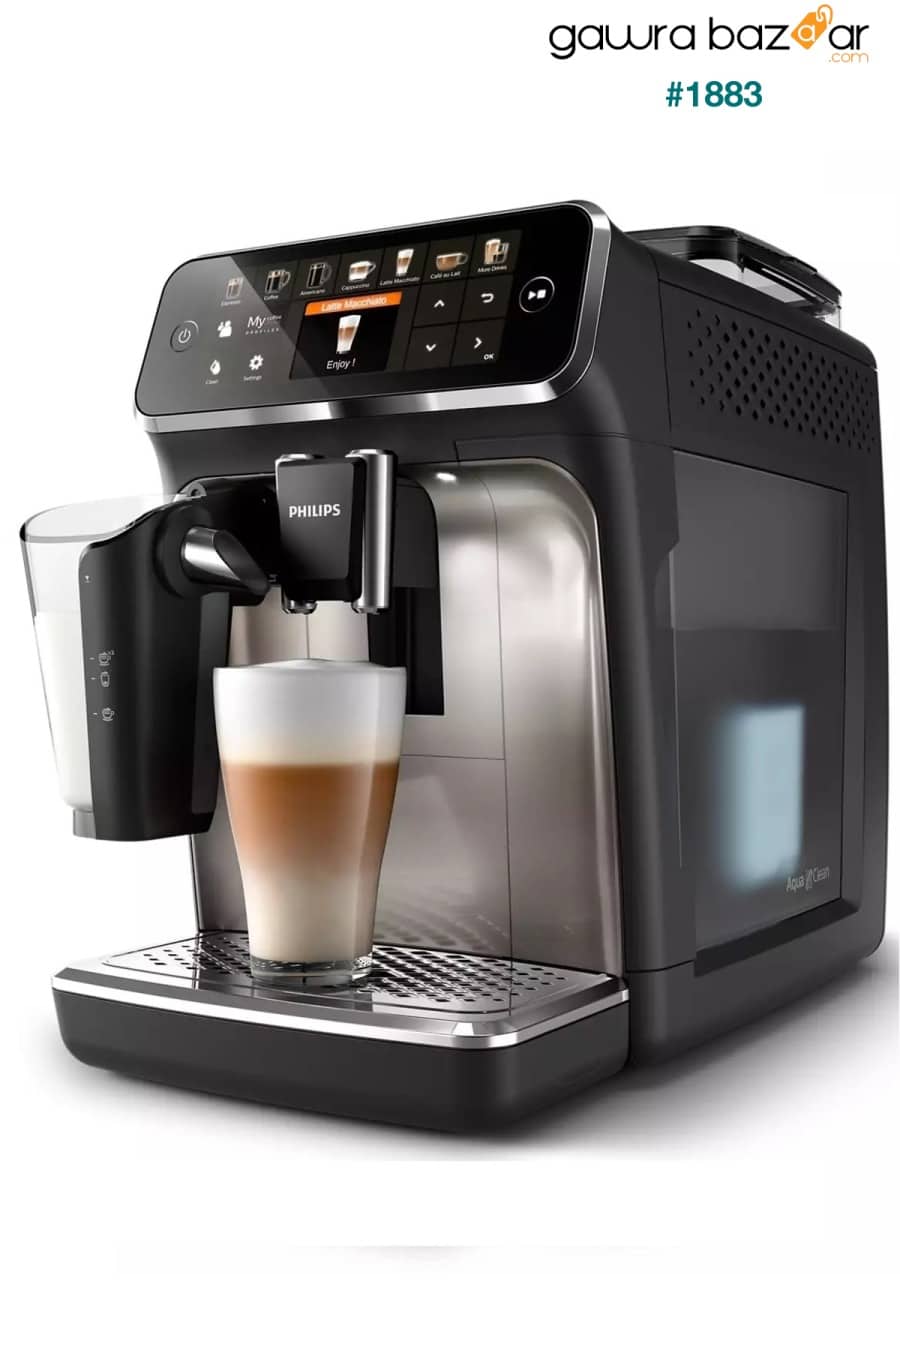 Ep5447 / 90 ماكينة تحضير القهوة والإسبريسو أوتوماتيكية بالكامل Philips 0